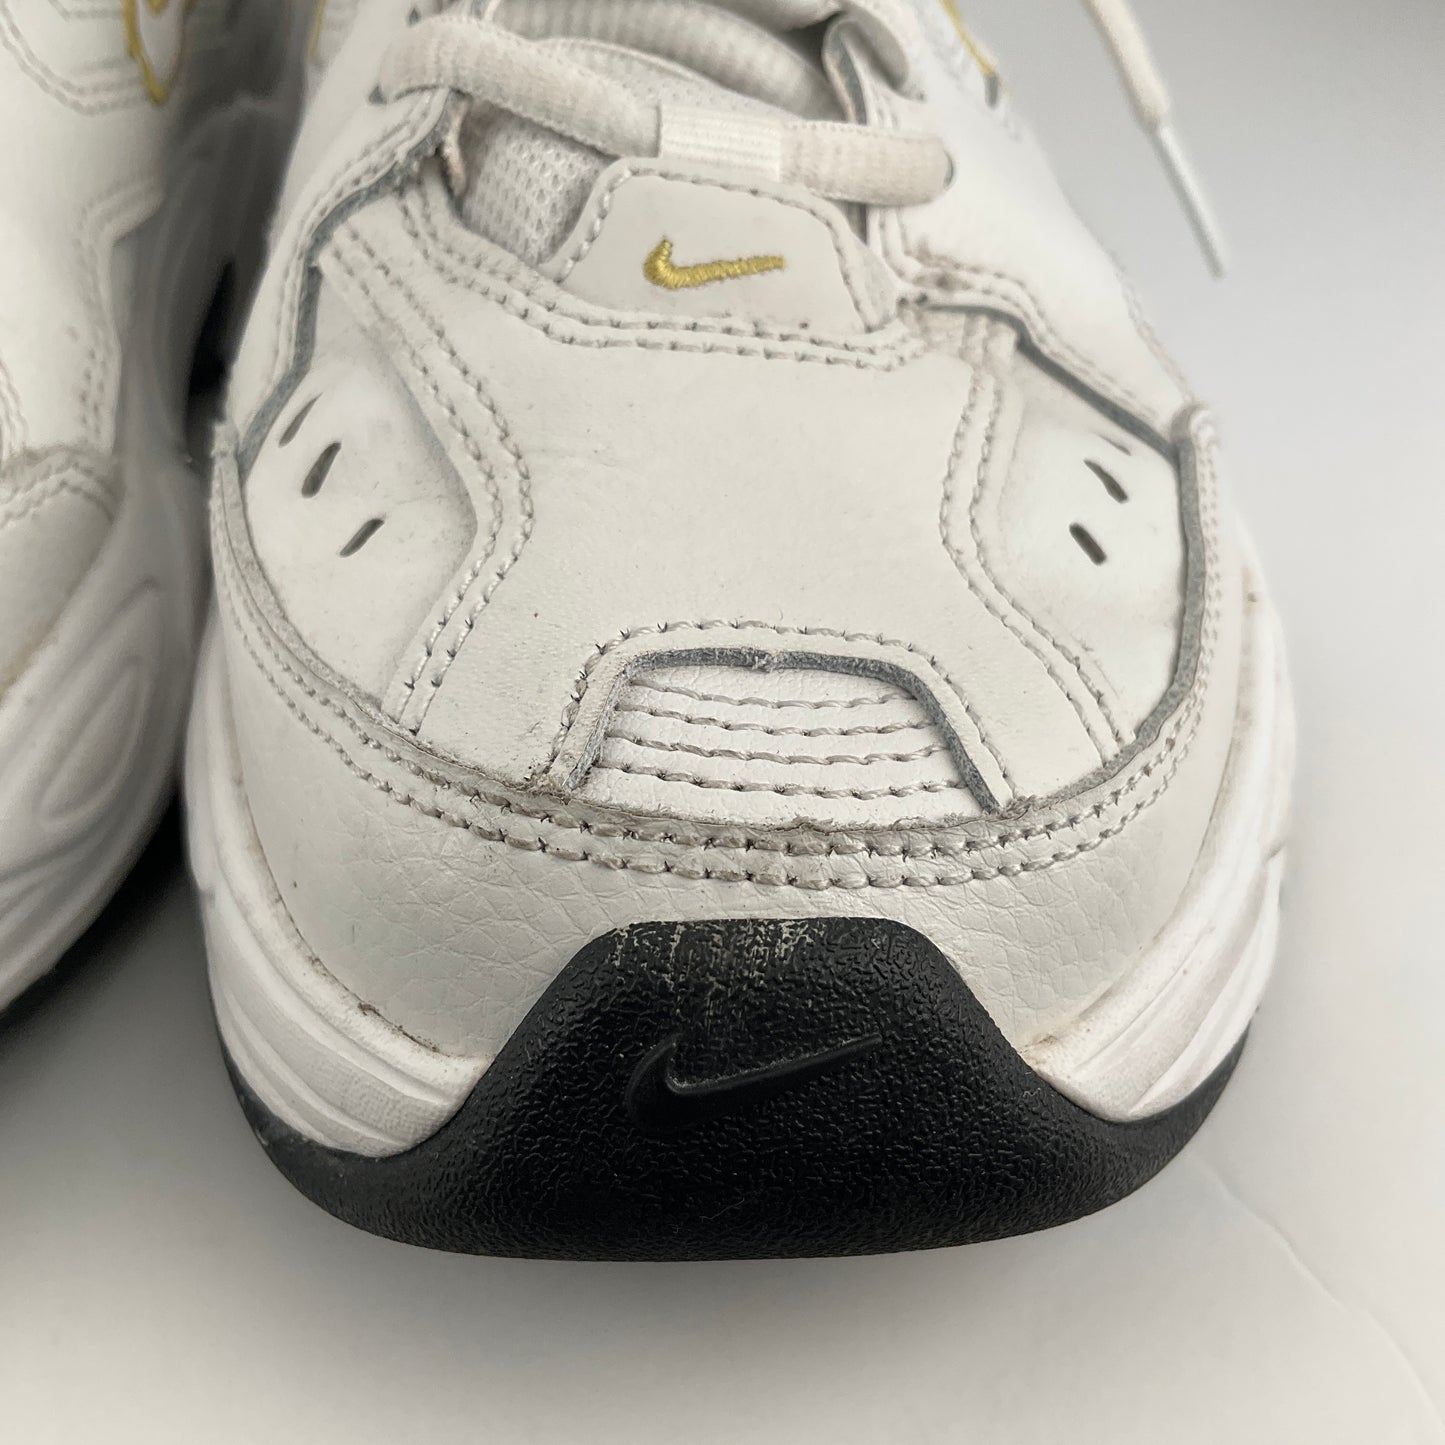 Nike - M2k Tekno Chunky Sneakers - Size 5